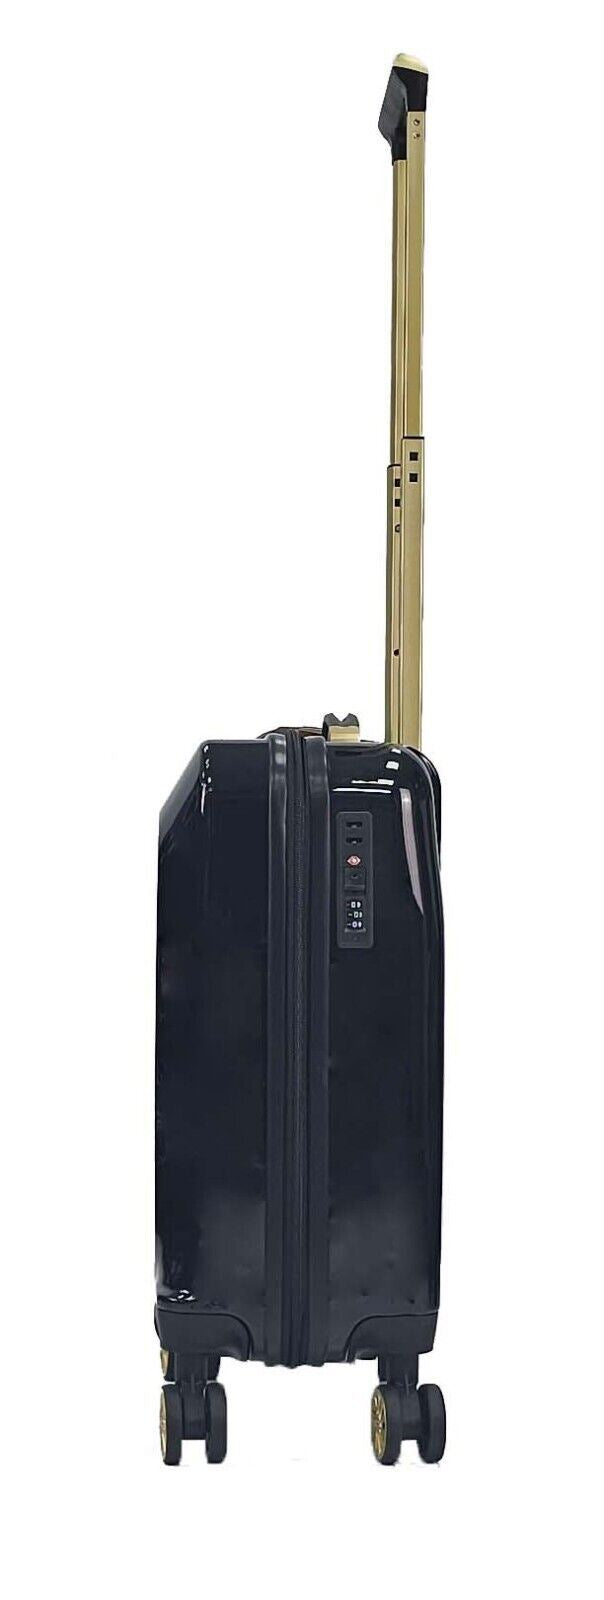 Butler Cabin Hard Shell Suitcase in Black